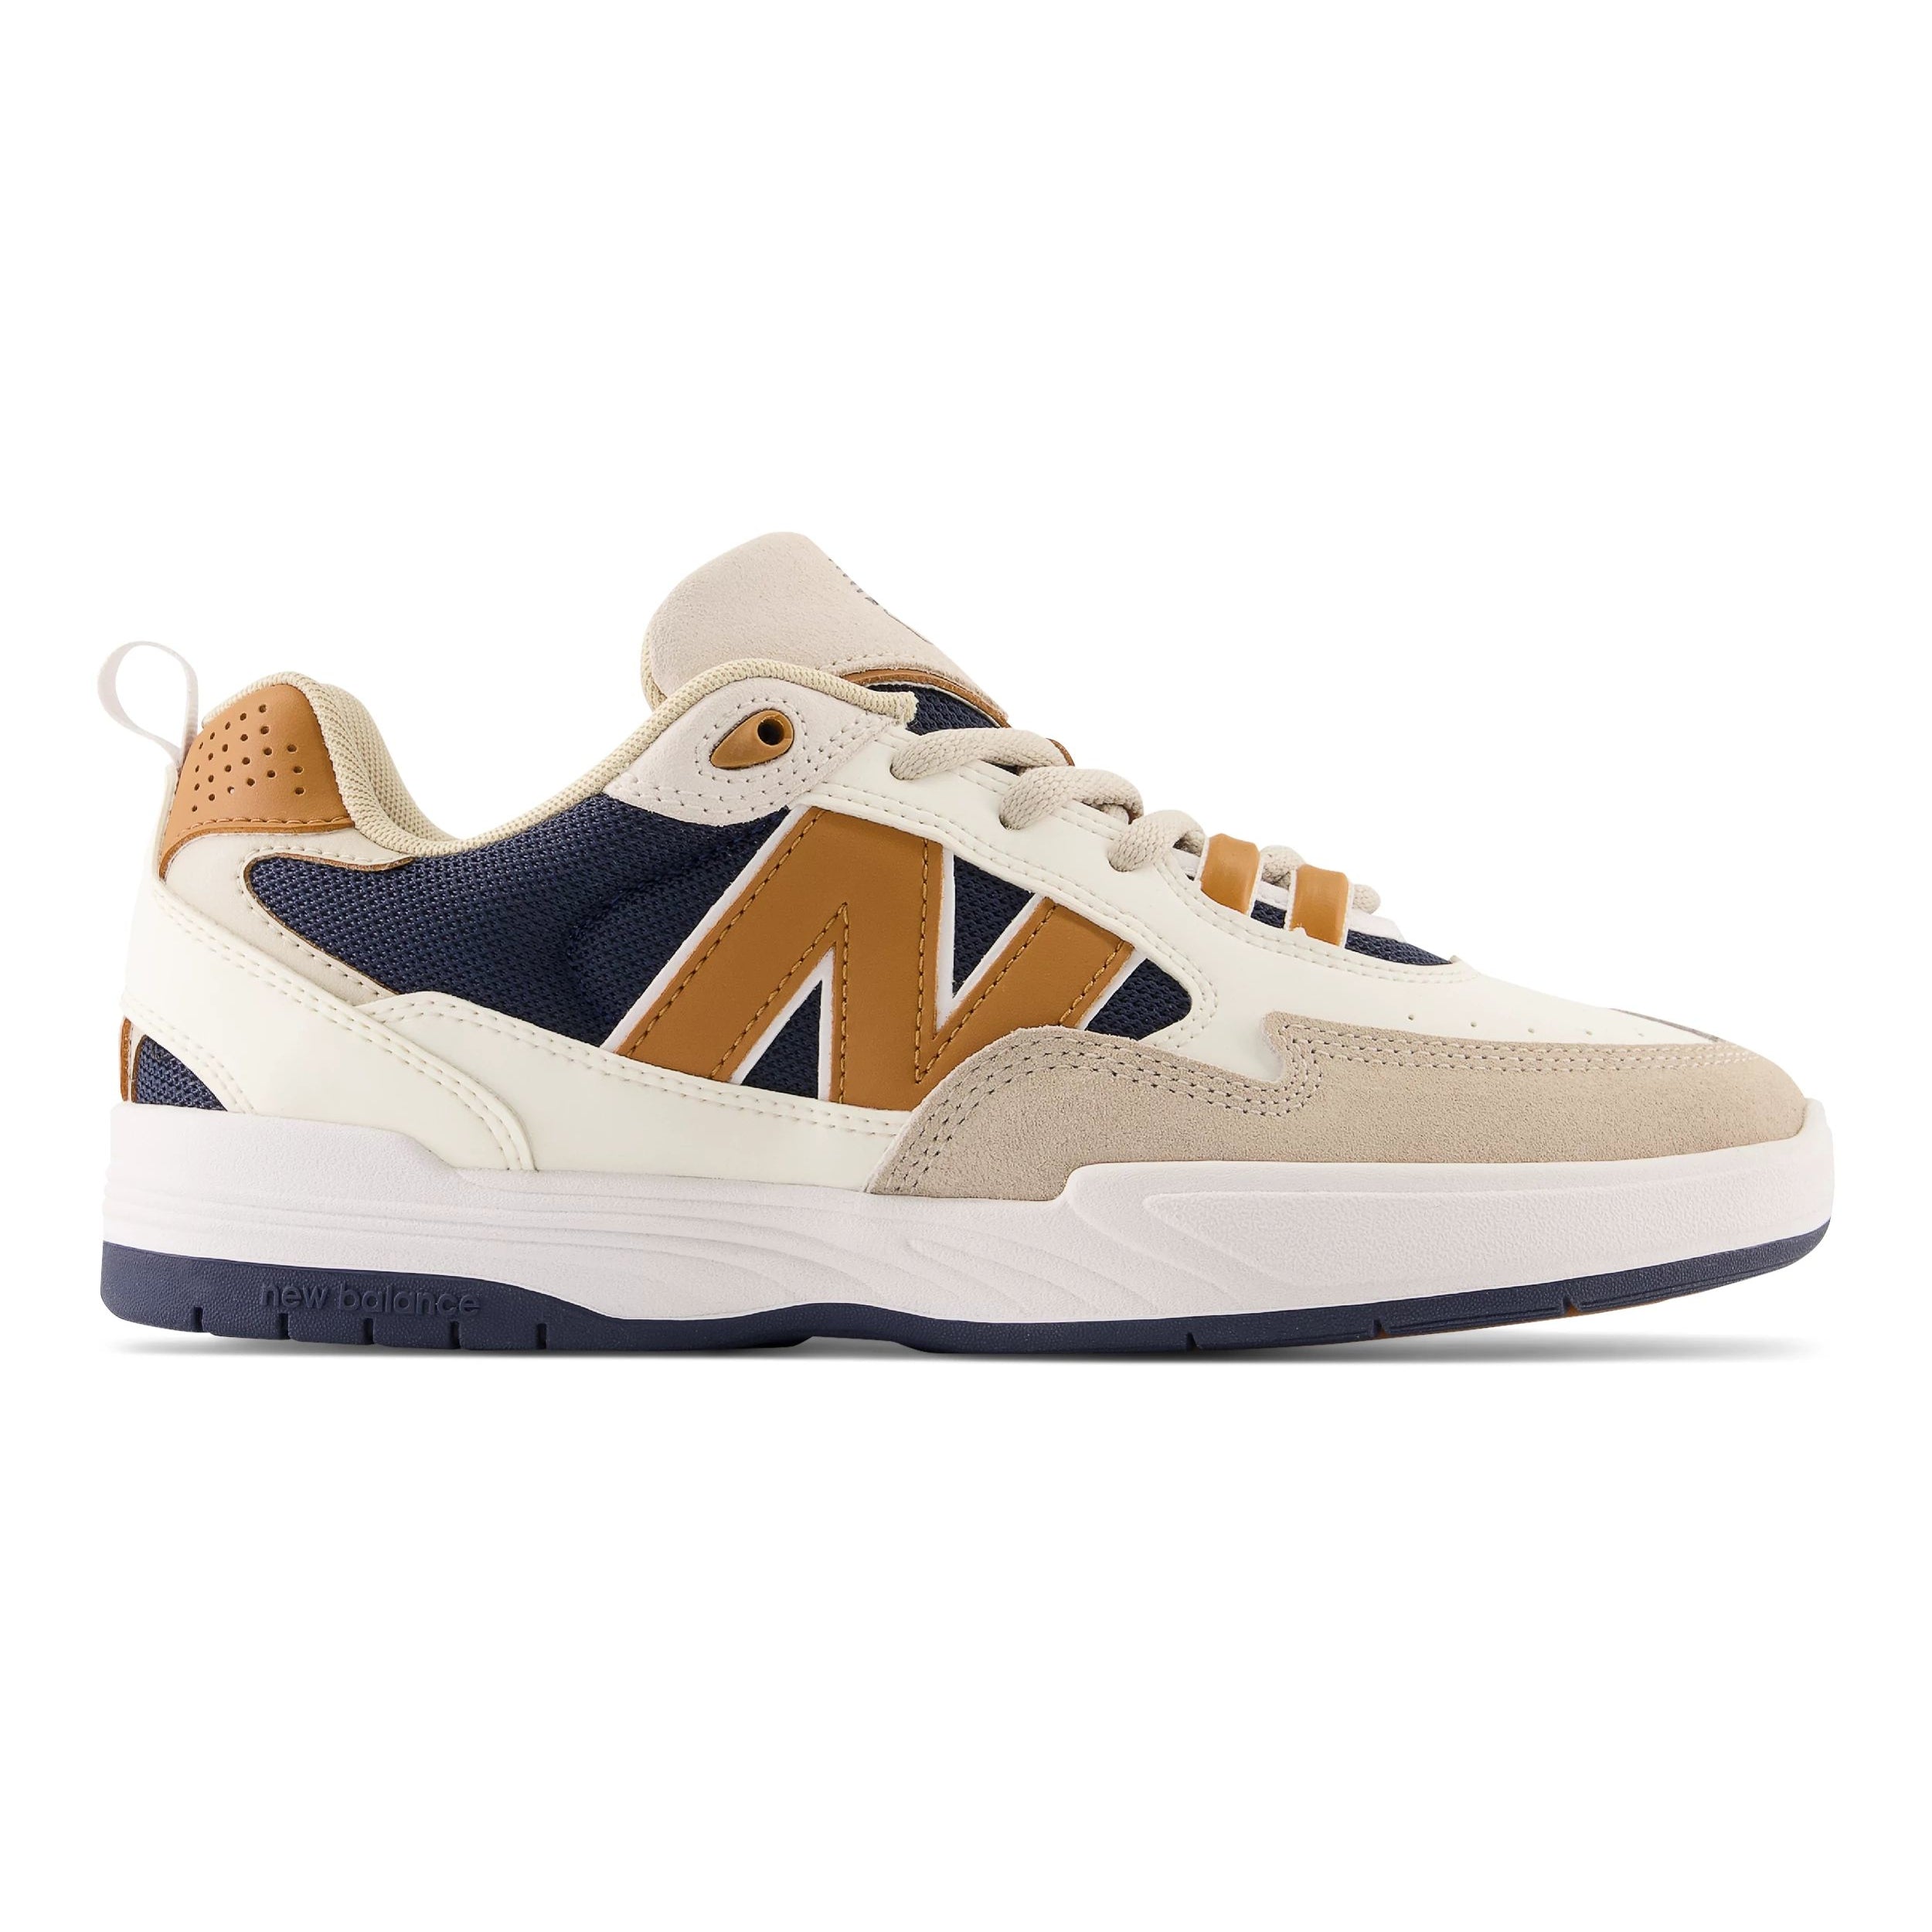 Tan/Navy NM808 NB Numeric Tiago Skate Shoe